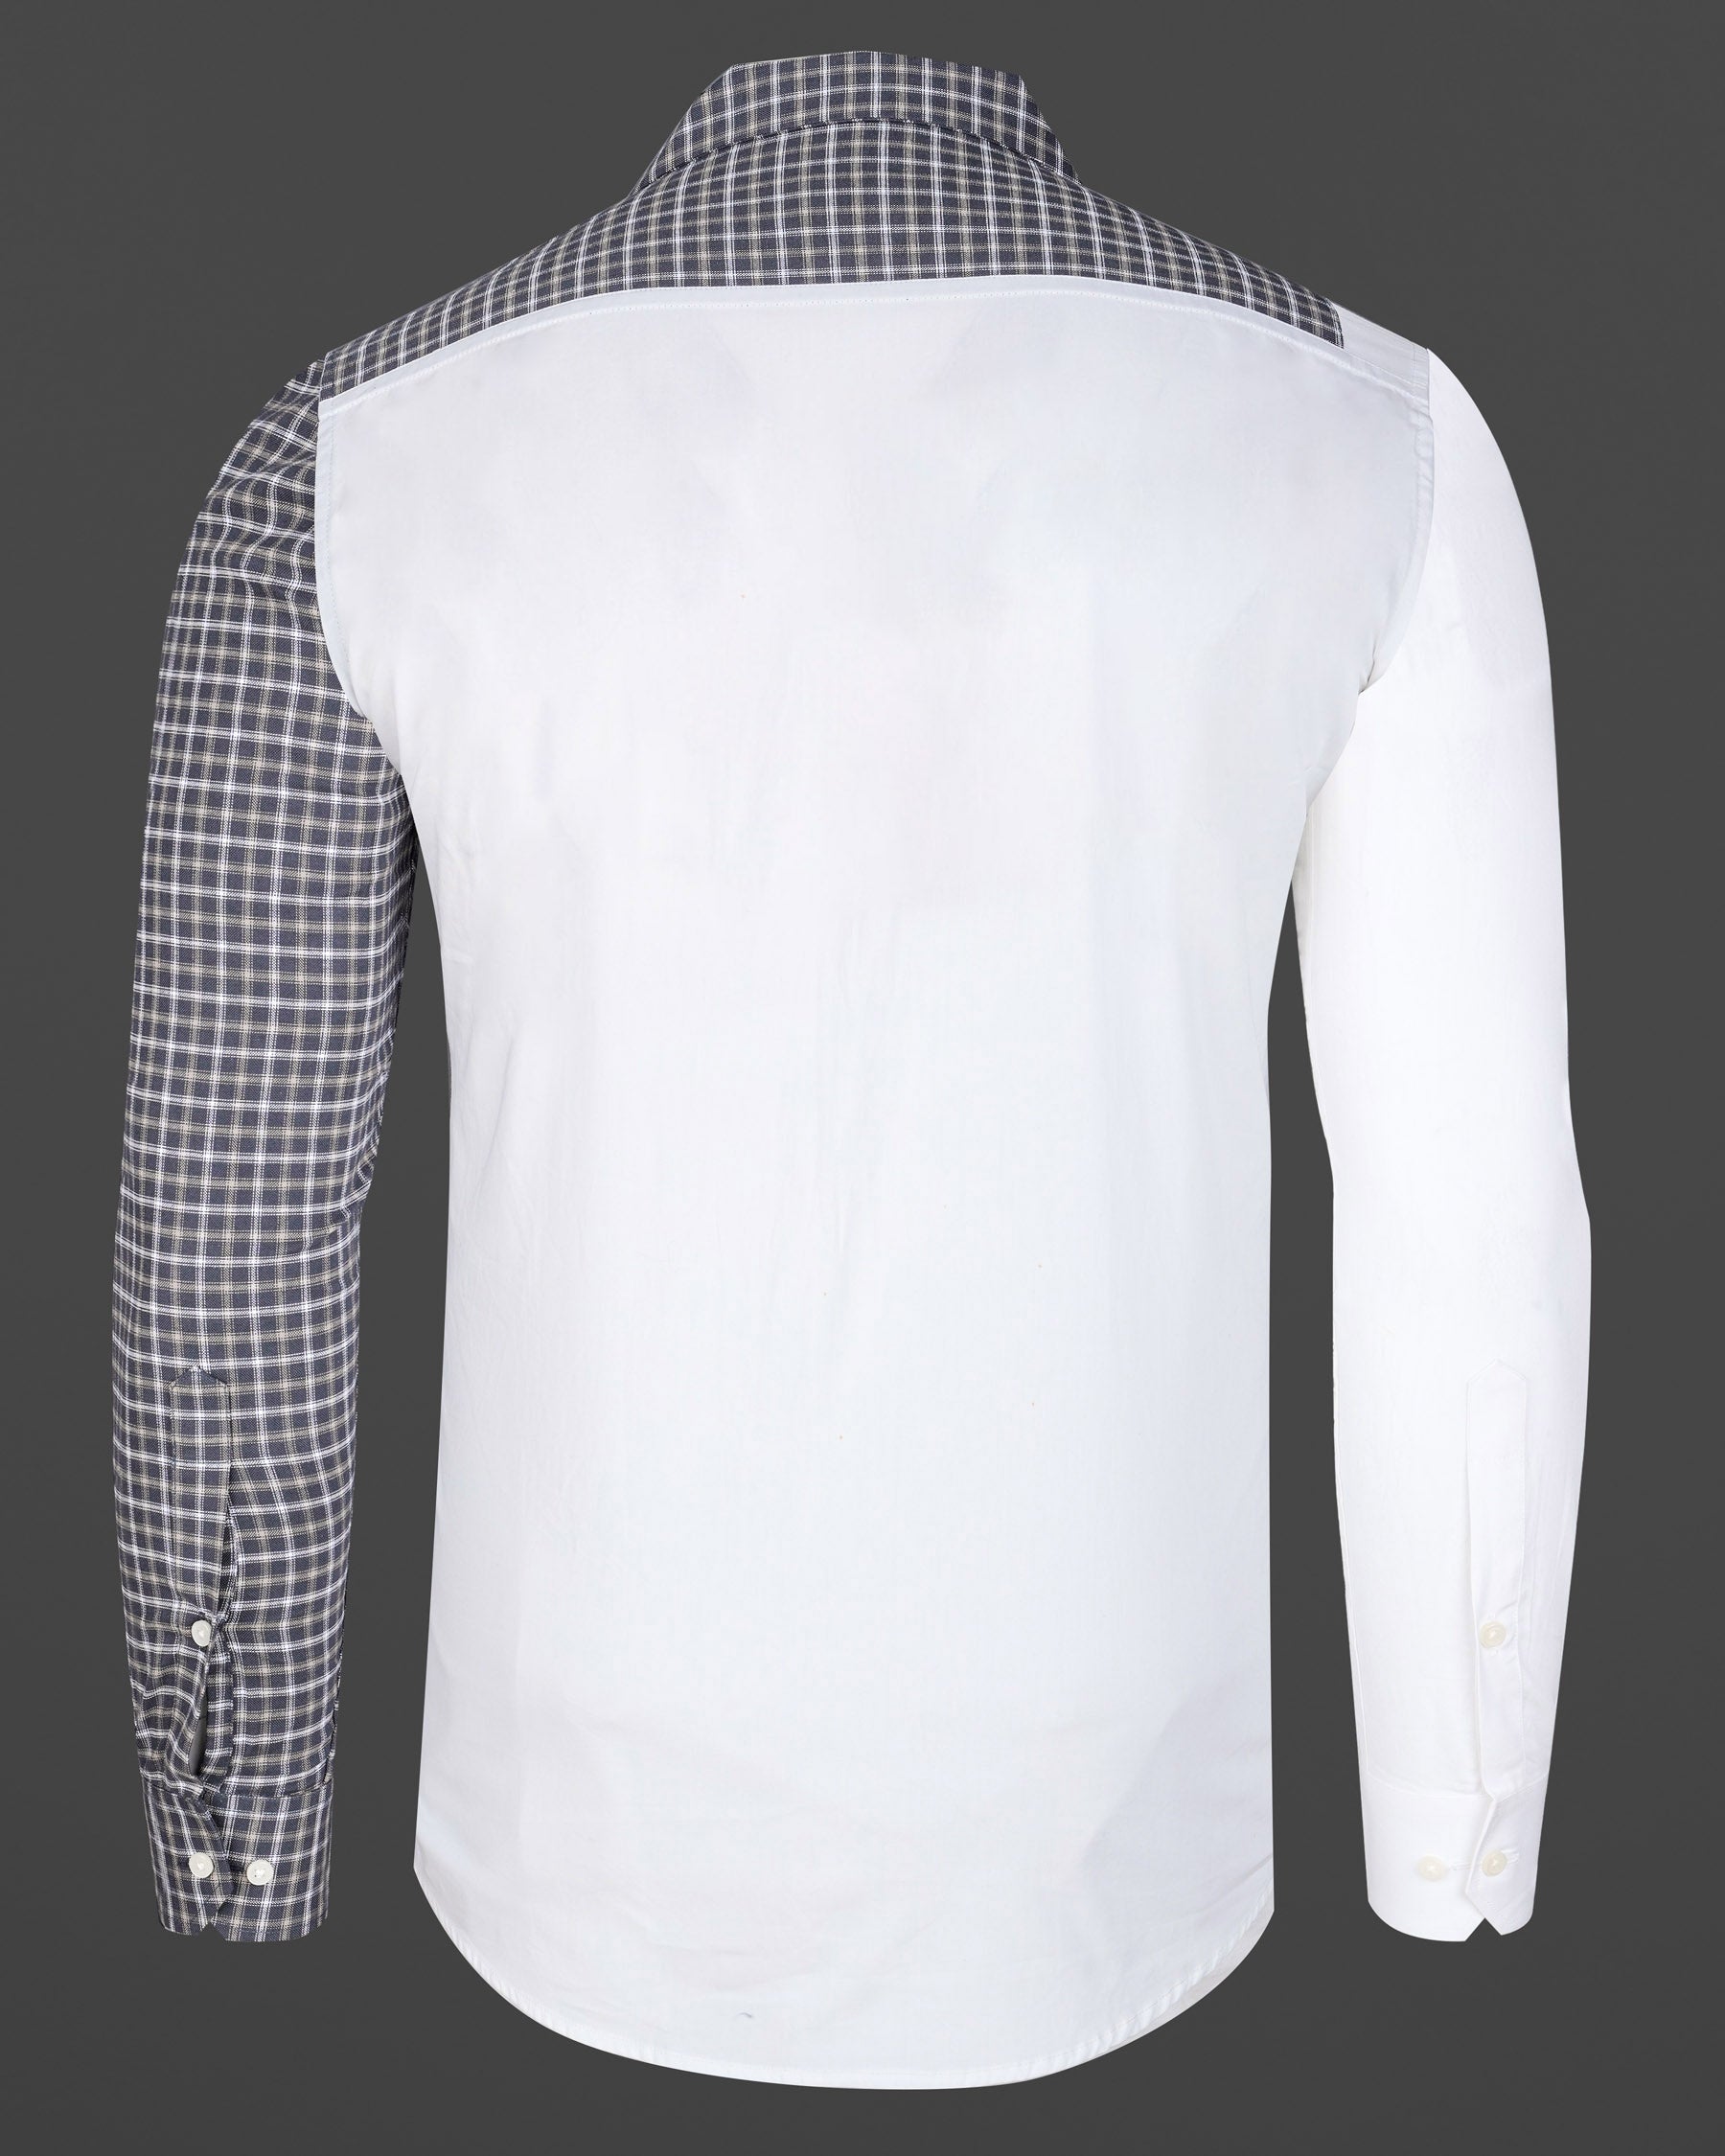 Bright White with Cadet Gray Checkered Super Soft Premium Cotton Designer Shirt 8136-CC-P188-38, 8136-CC-P188-H-38, 8136-CC-P188-39, 8136-CC-P188-H-39, 8136-CC-P188-40, 8136-CC-P188-H-40, 8136-CC-P188-42, 8136-CC-P188-H-42, 8136-CC-P188-44, 8136-CC-P188-H-44, 8136-CC-P188-46, 8136-CC-P188-H-46, 8136-CC-P188-48, 8136-CC-P188-H-48, 8136-CC-P188-50, 8136-CC-P188-H-50, 8136-CC-P188-52, 8136-CC-P188-H-52